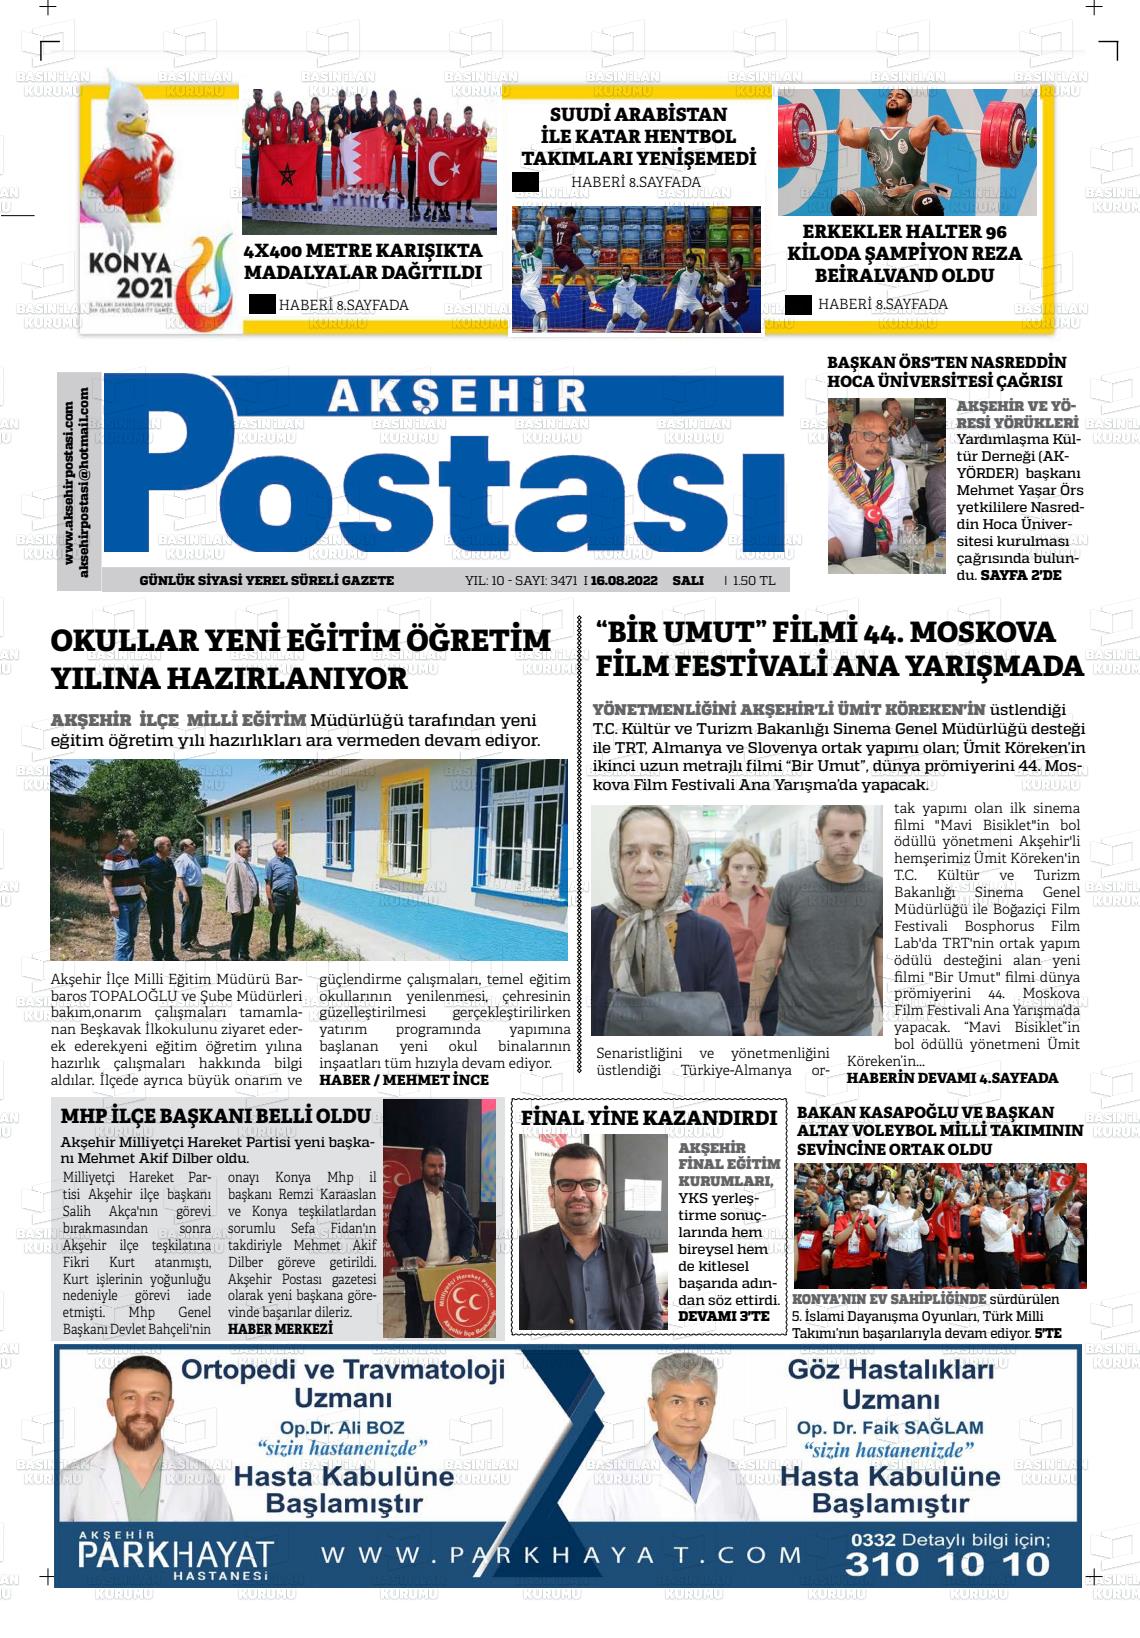 16 Ağustos 2022 Akşehir Postasi Gazete Manşeti